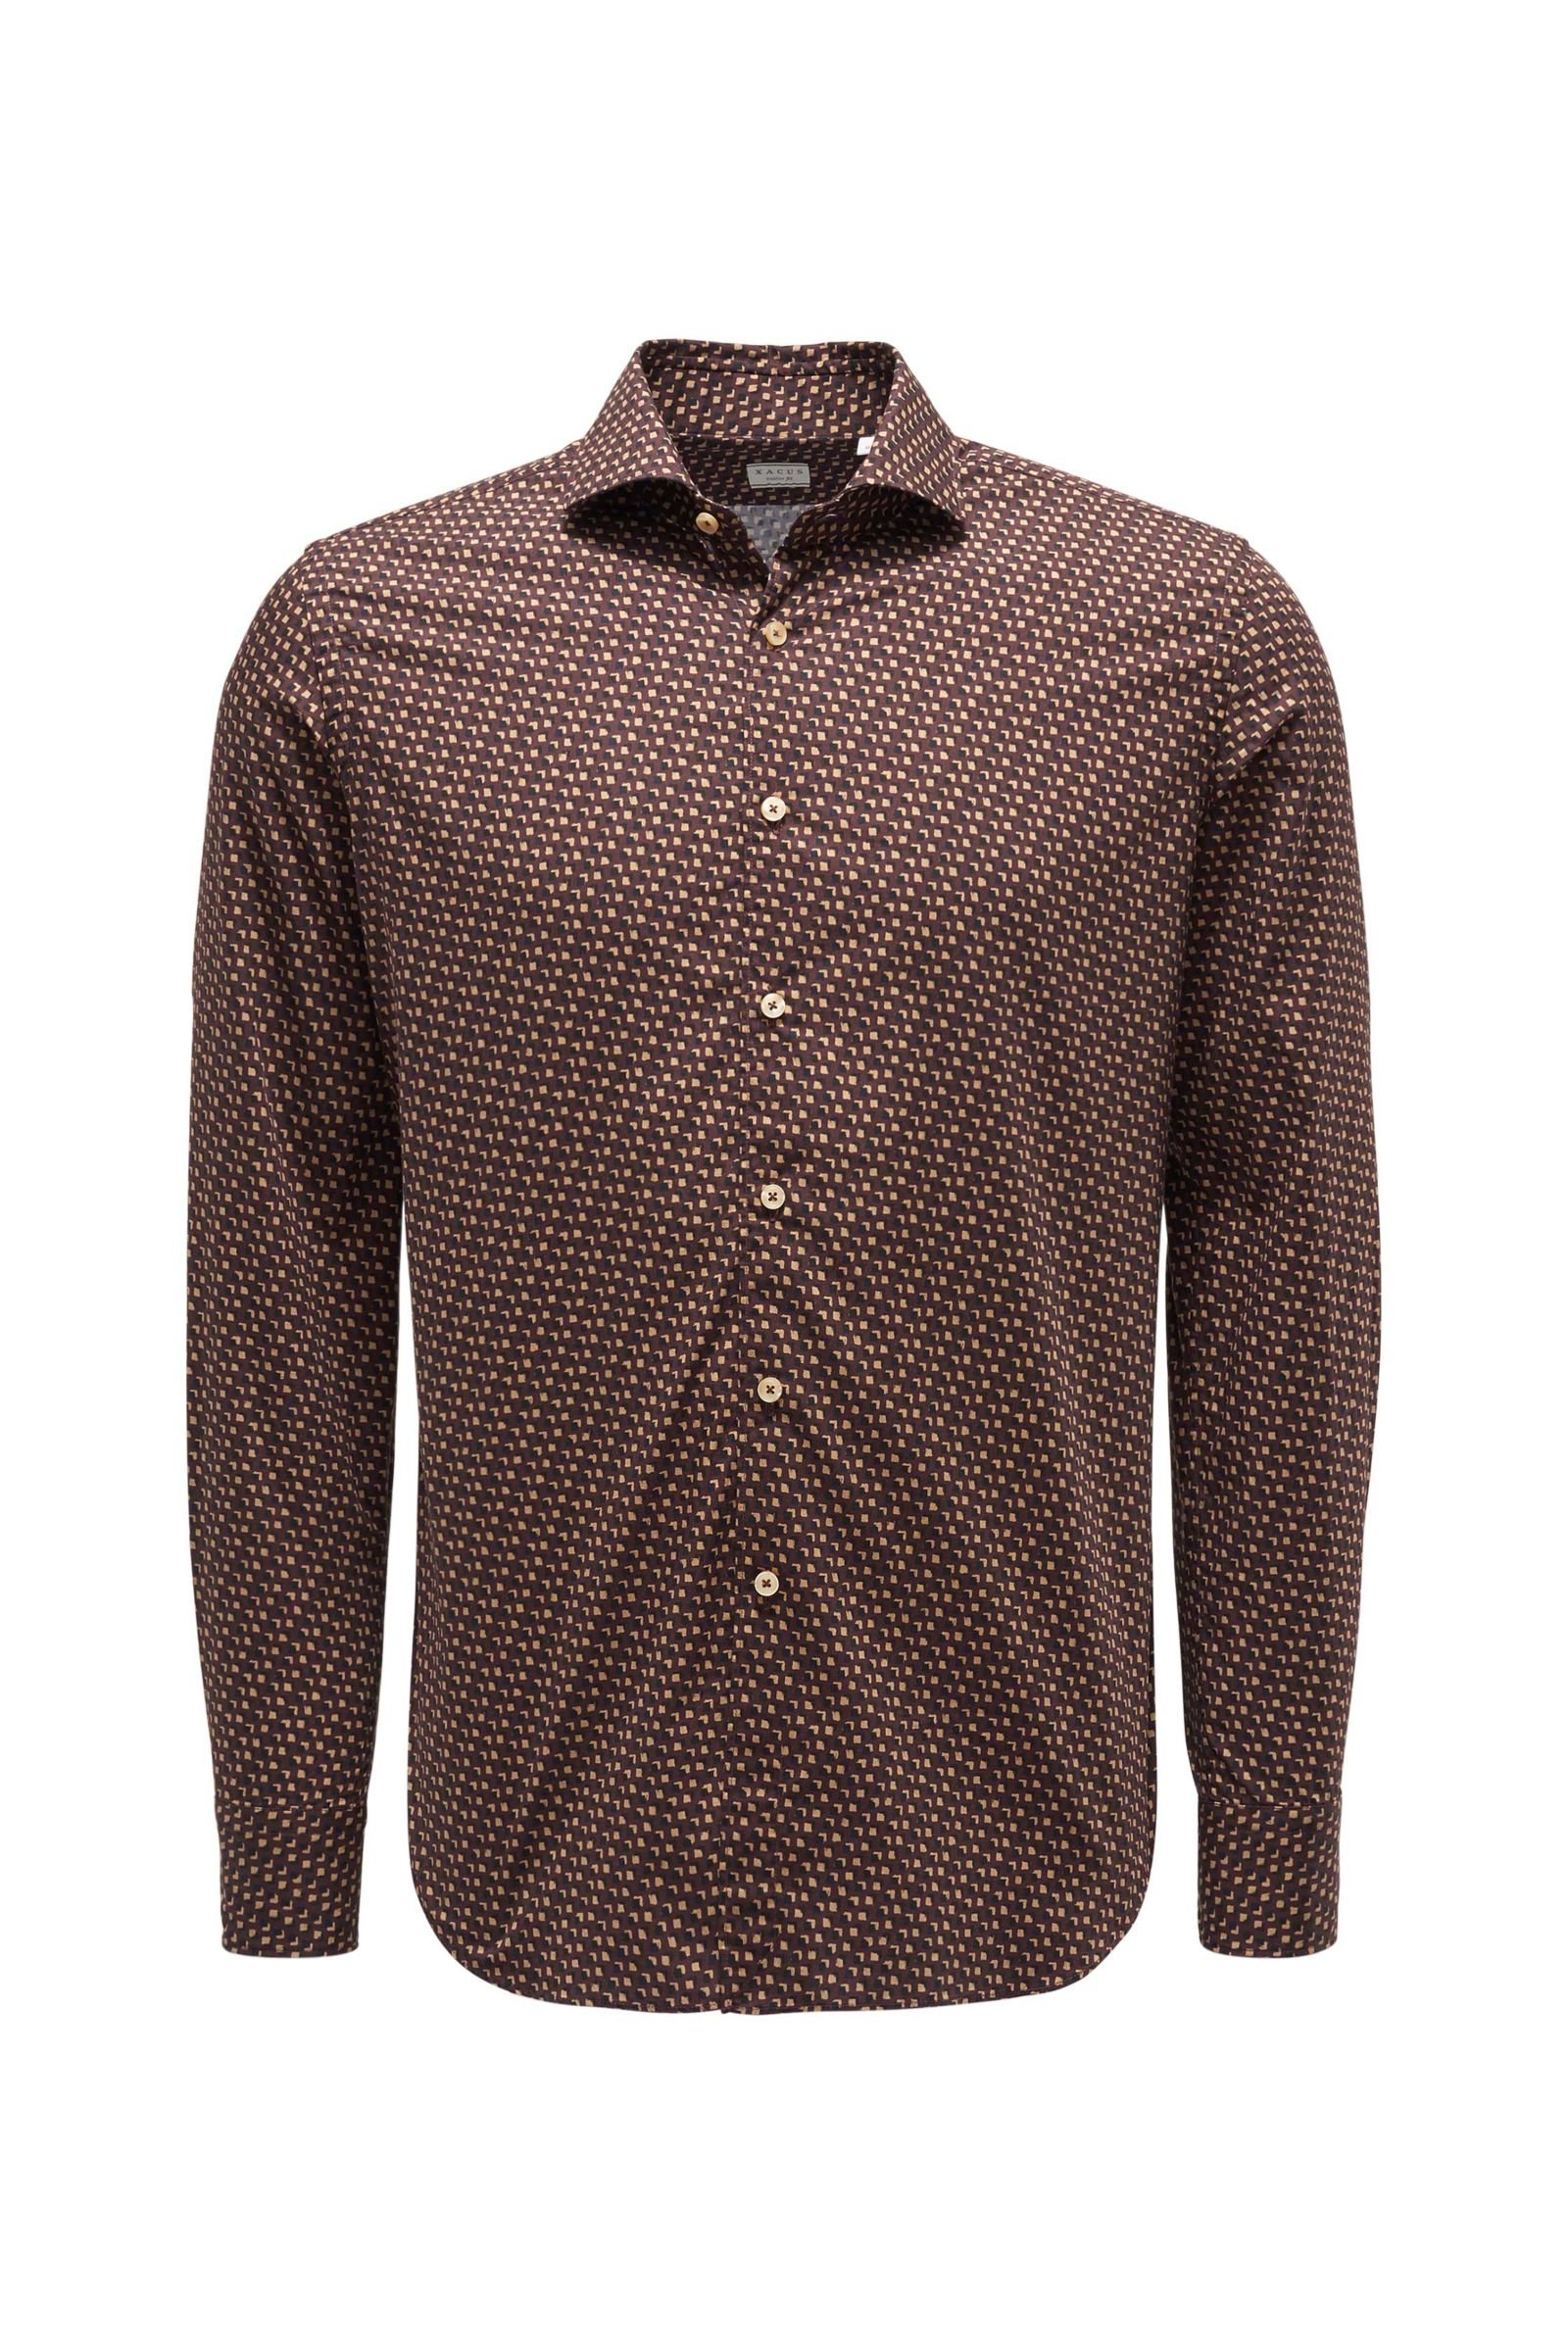 Casual shirt 'Tailor Fit' shark collar dark brown patterned